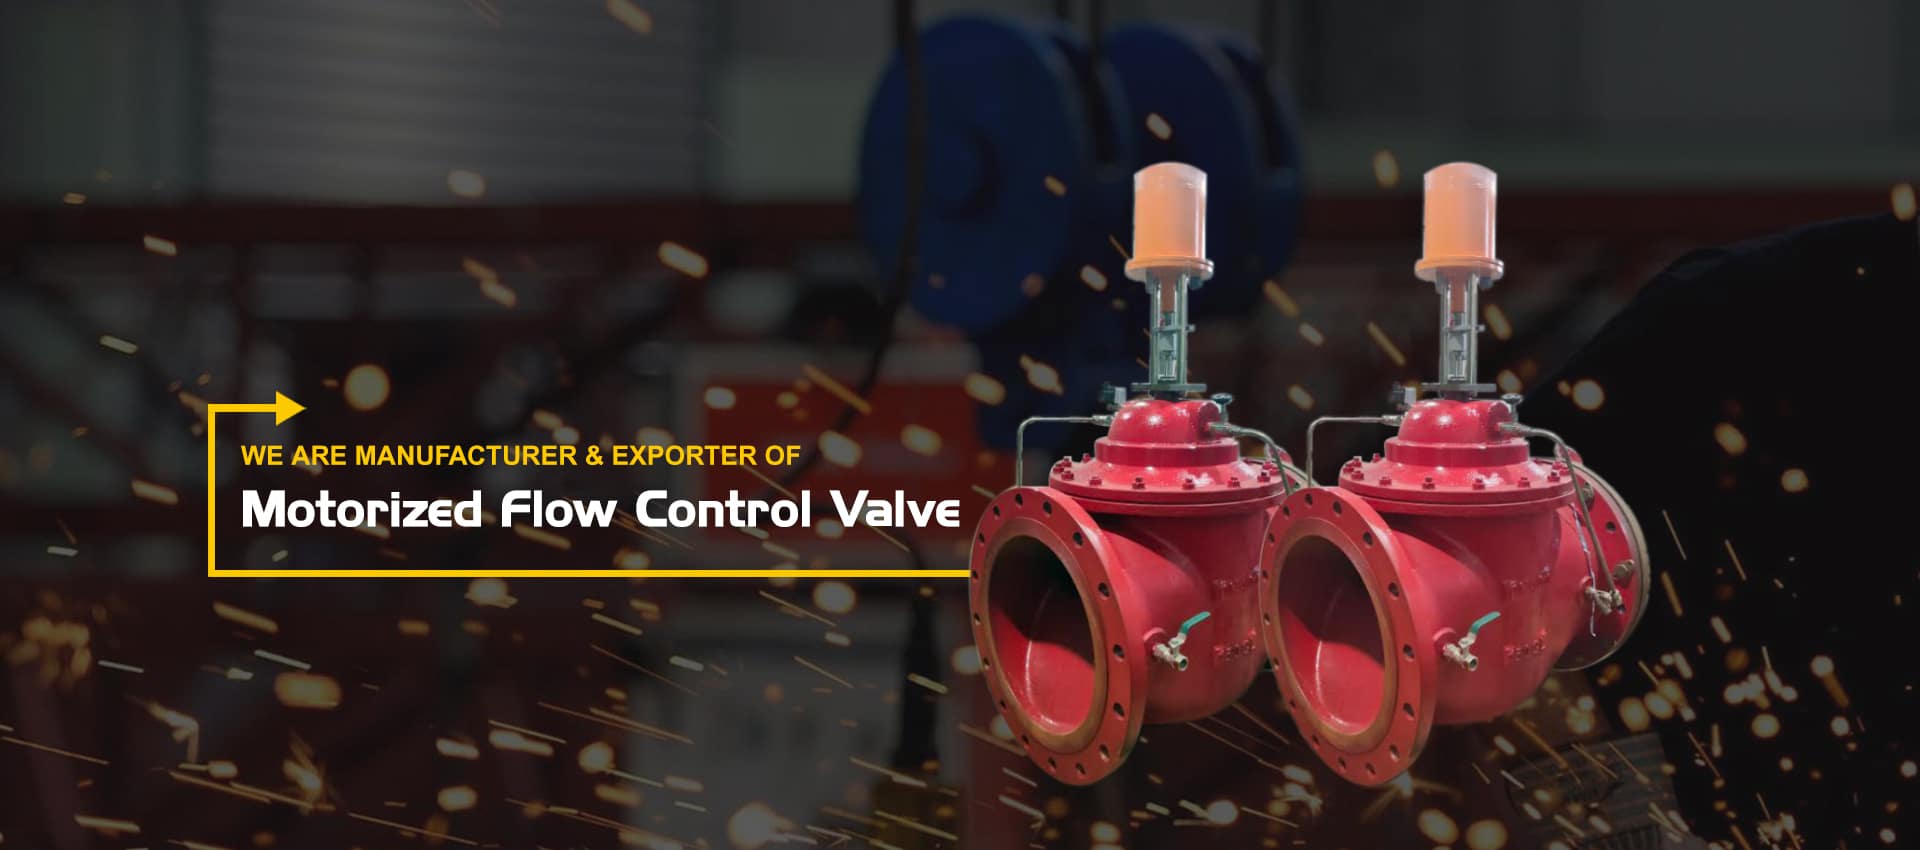 Motorized Flow Control Valve Manufacturer Motorized Flow Control Valve Manufacturer